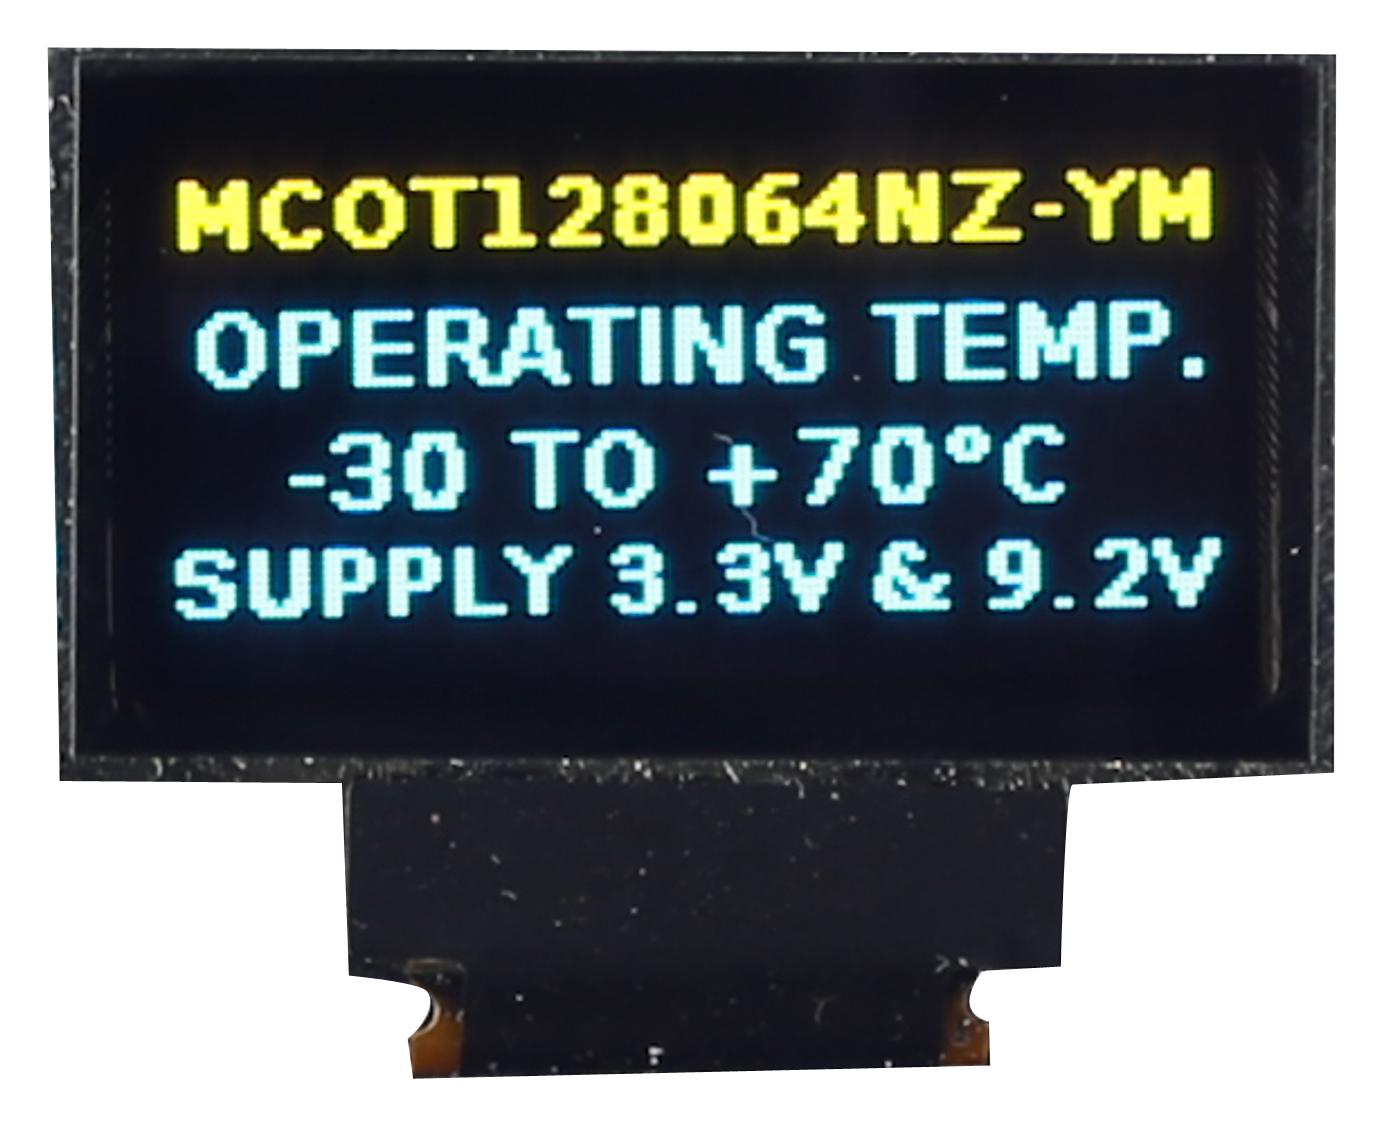 MCOT128064N2Z-YBM